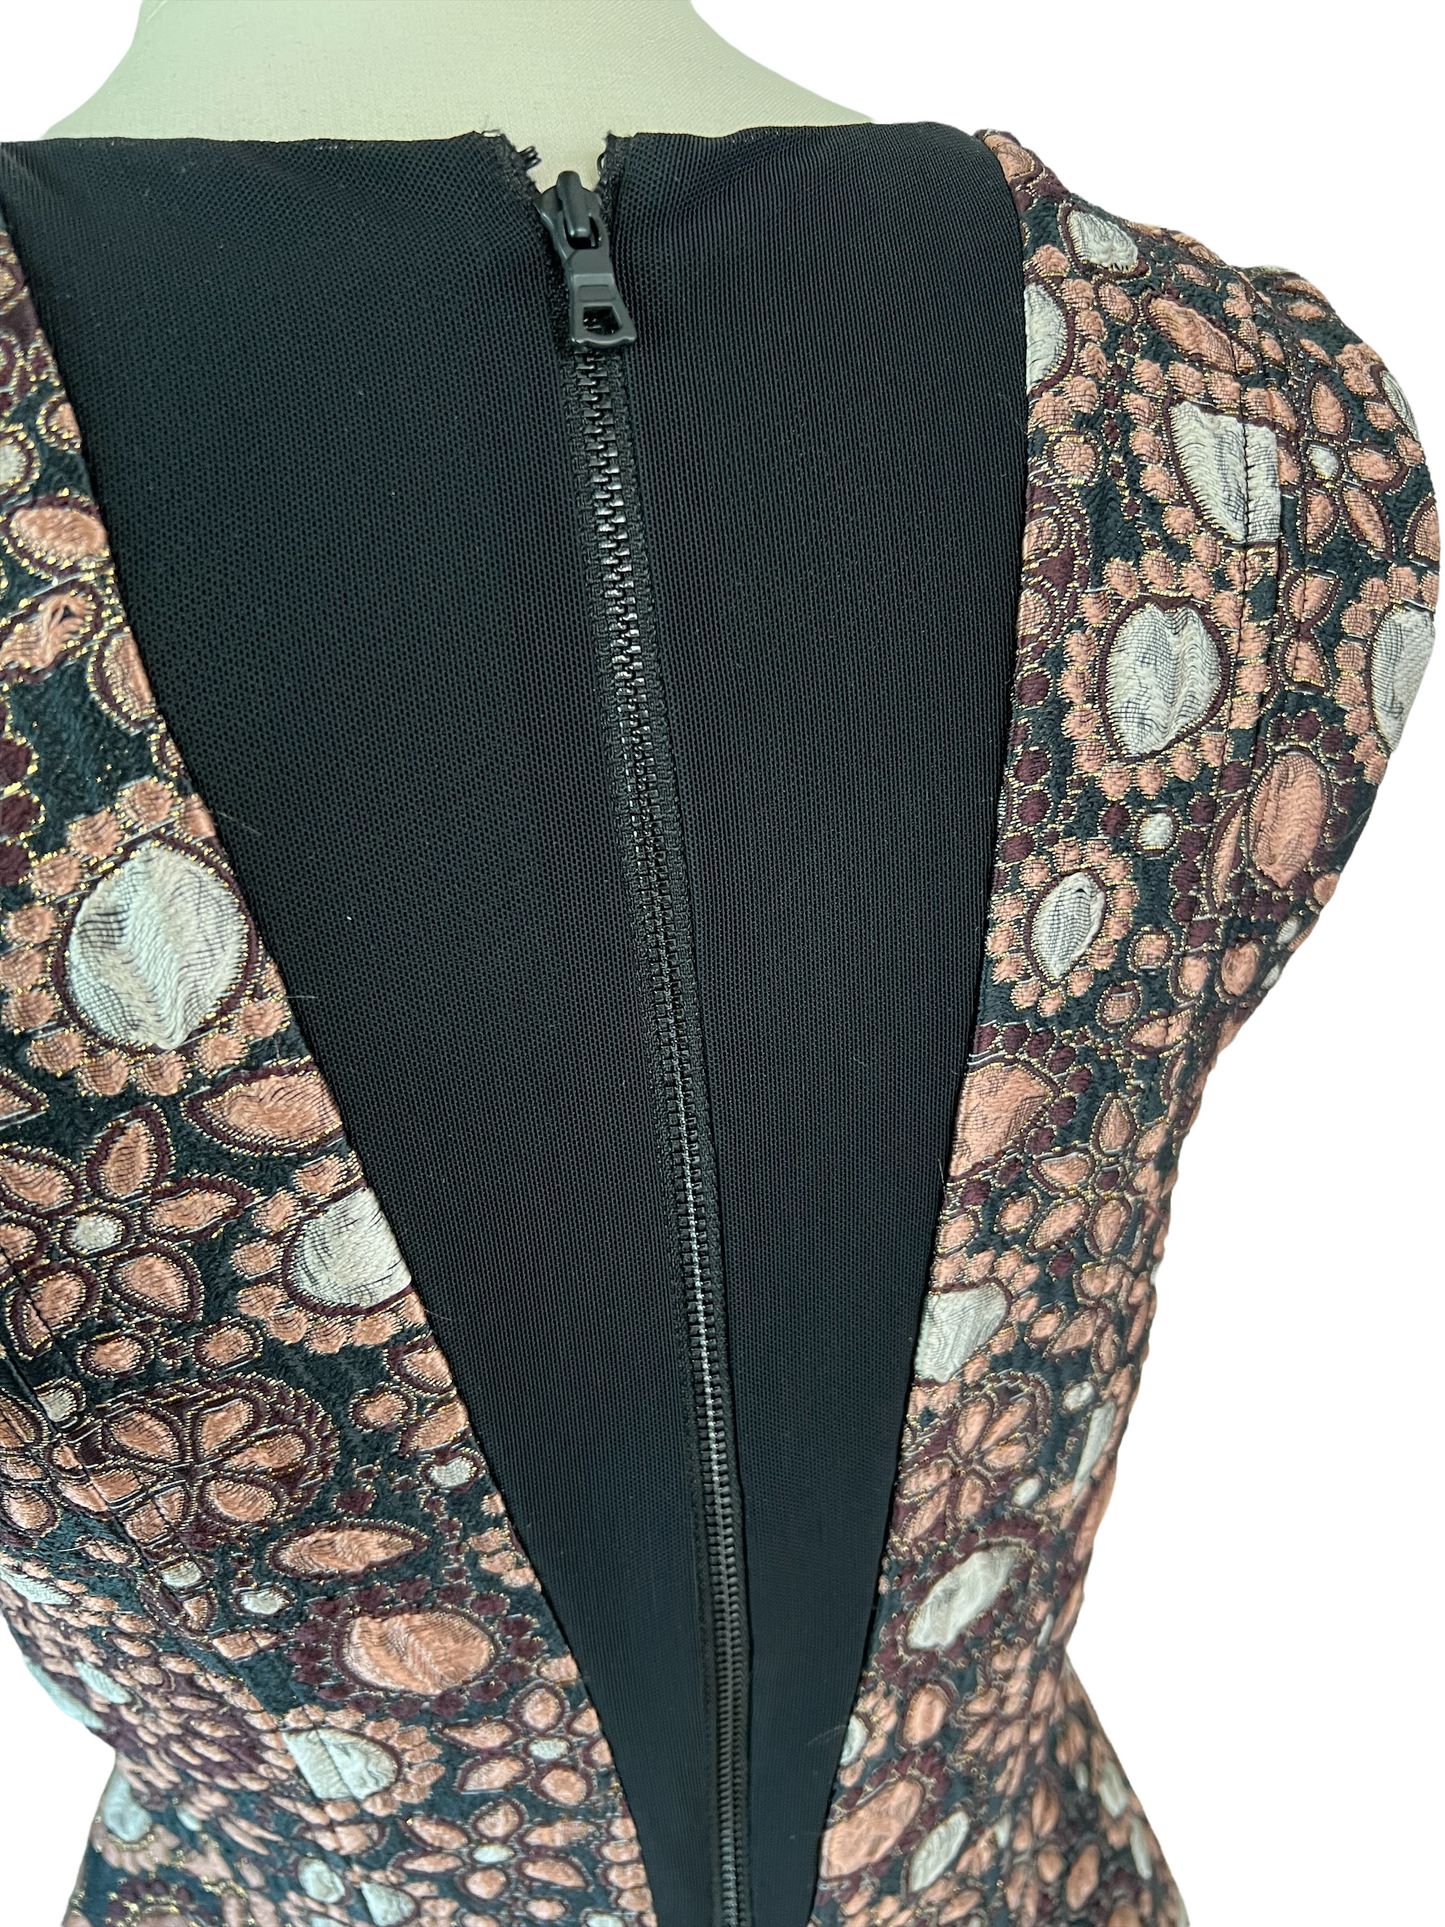 Black & Metallic Fabric Dress - 2